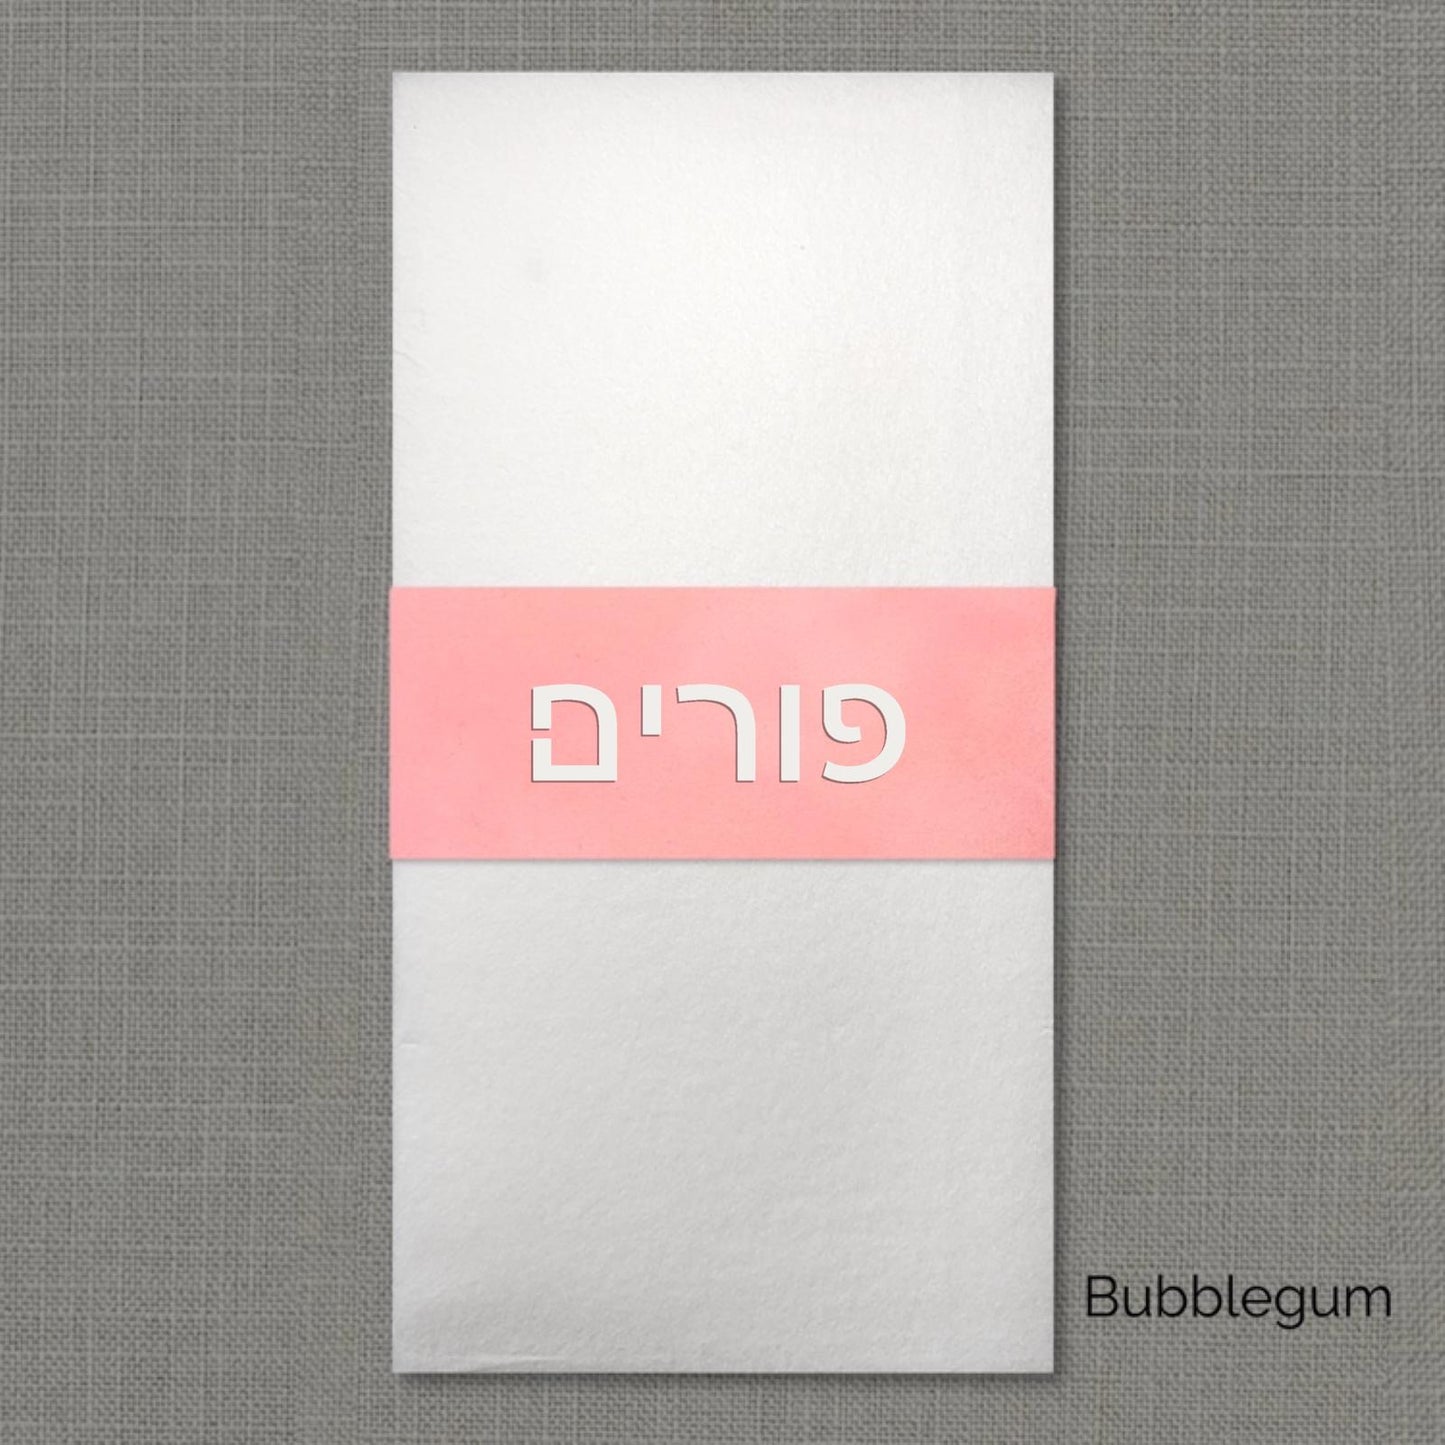 Purim Velvet Napkin Wrap